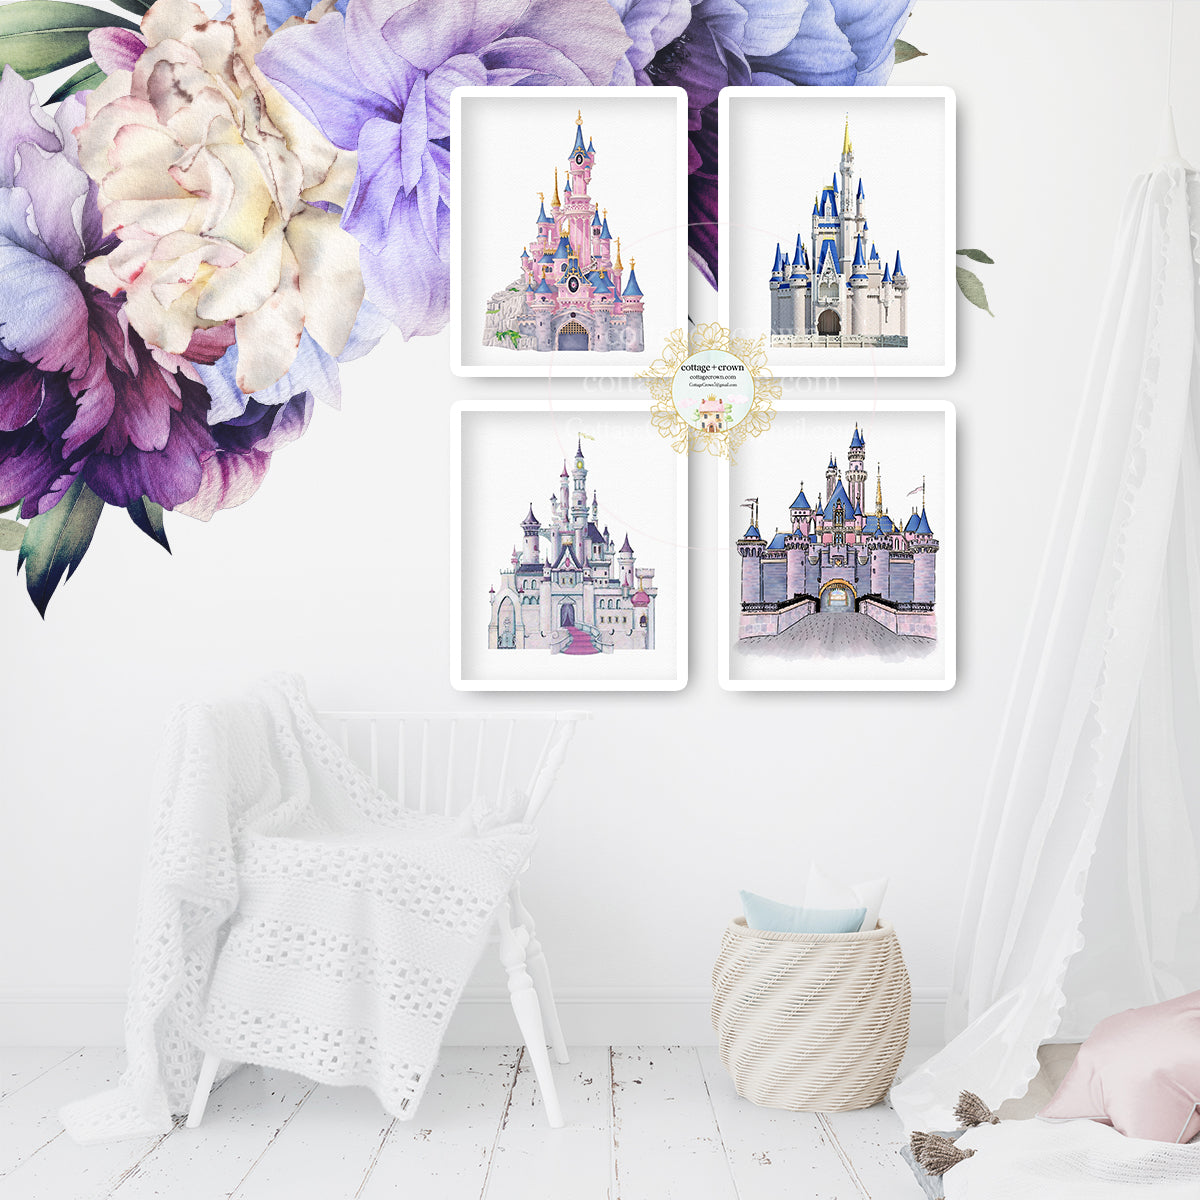 4 Magic Kingdom Princess Disney Castle Set Wall Art Prints - Cinderella - Frozen - Elsa - Sleeping Beauty